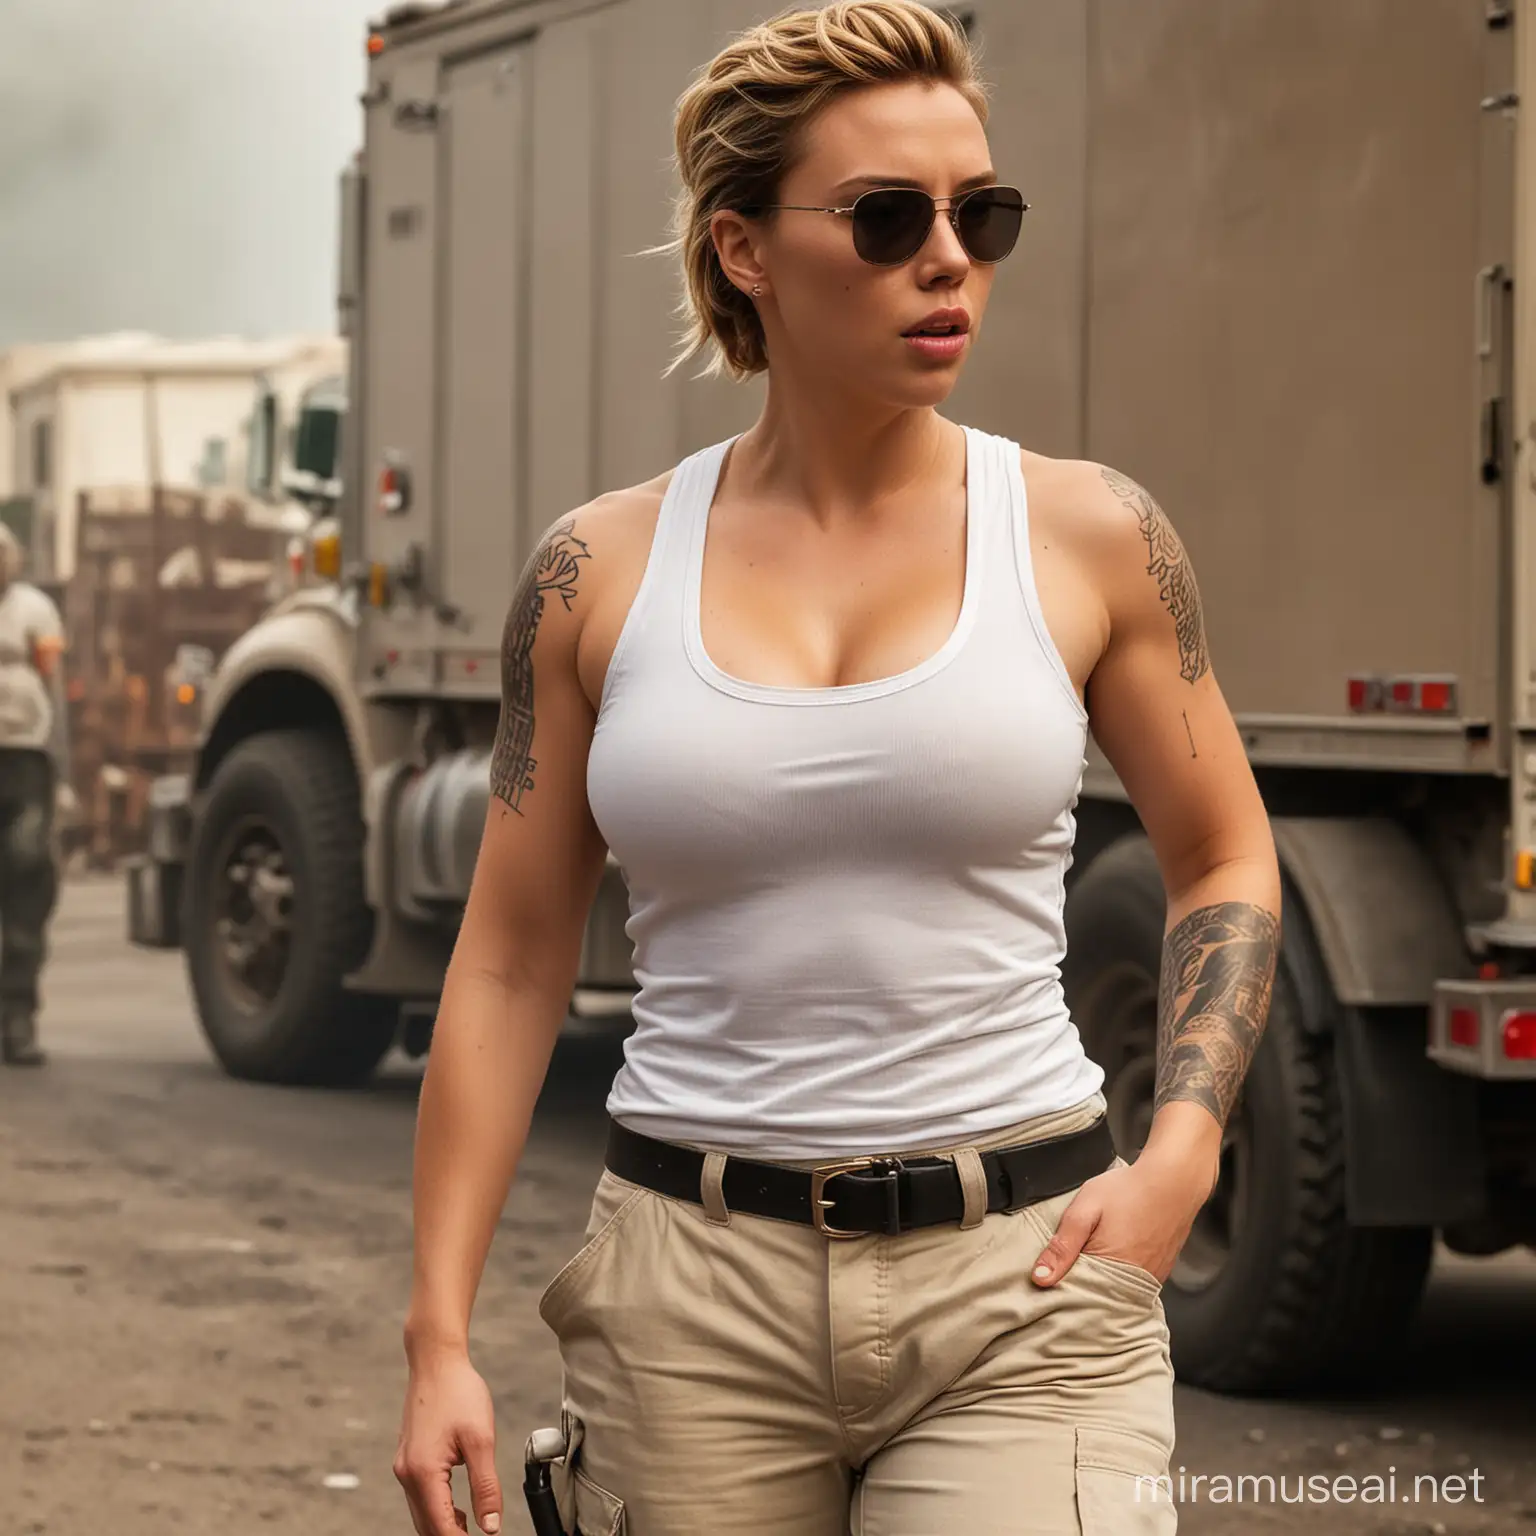 Scarlett Johansson Muscular Firefighter in White Tank Top and Sunglasses